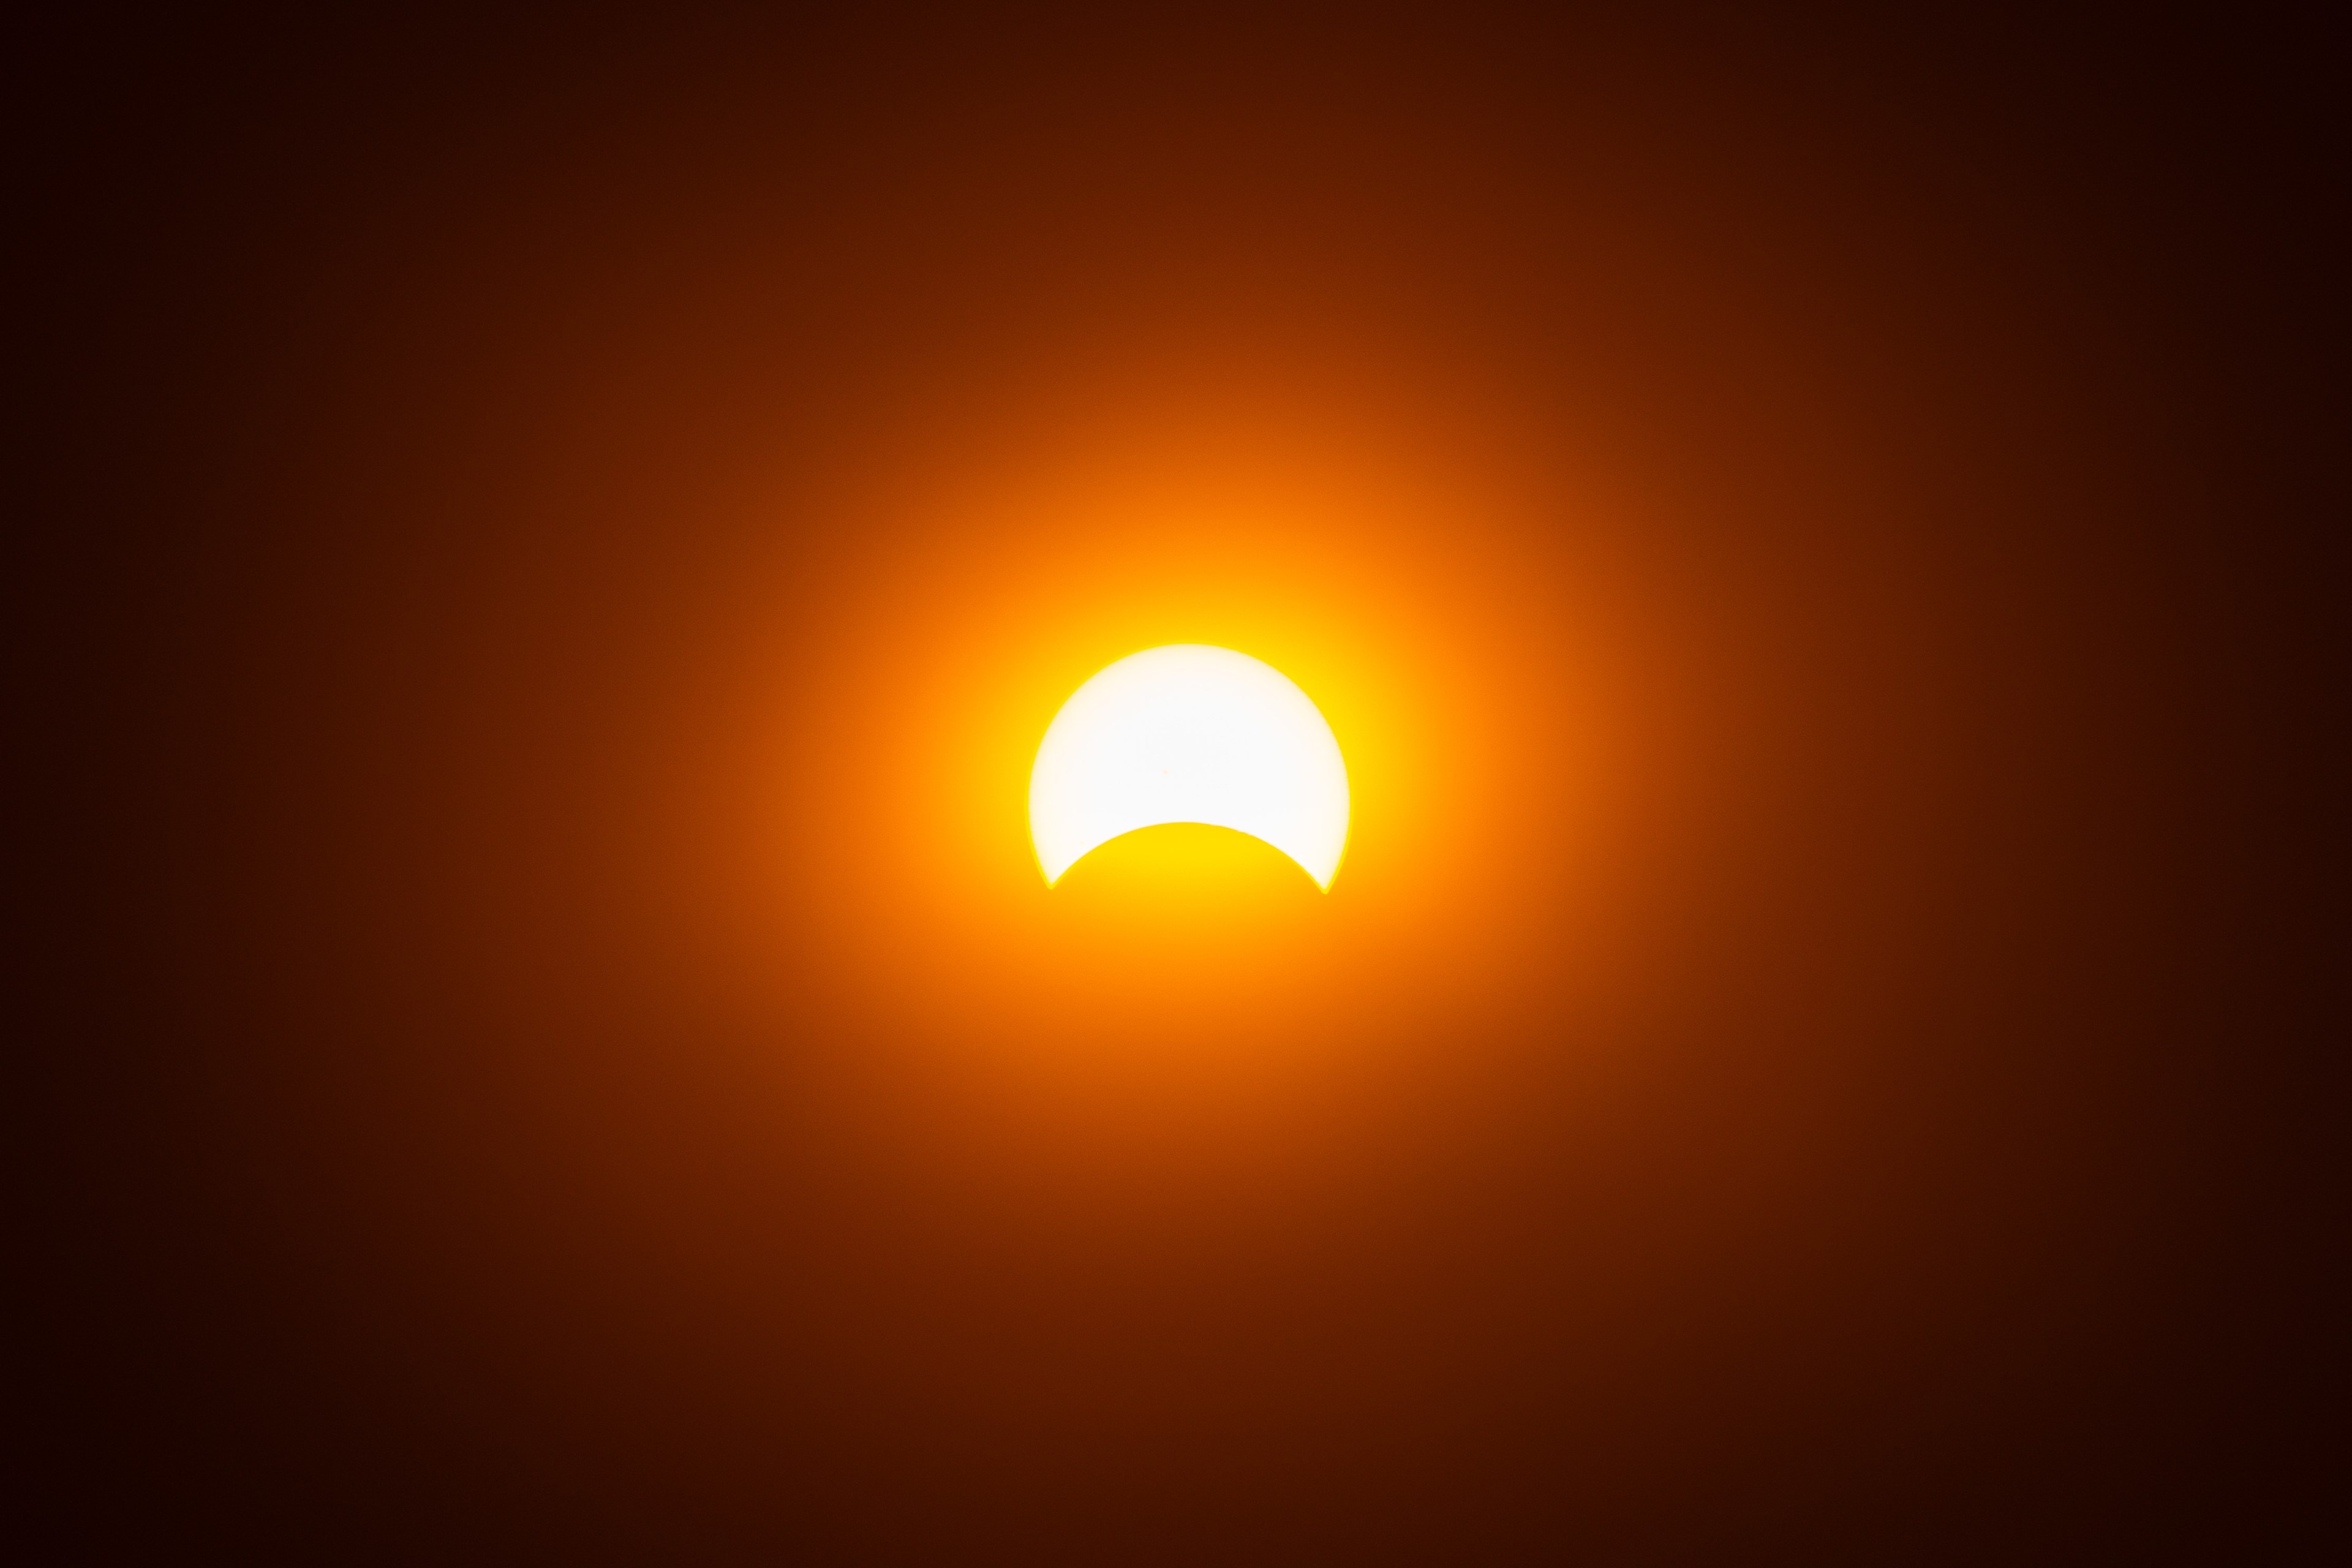 A solar eclipse; the Moon partially covers the Sun, against an orange sky.